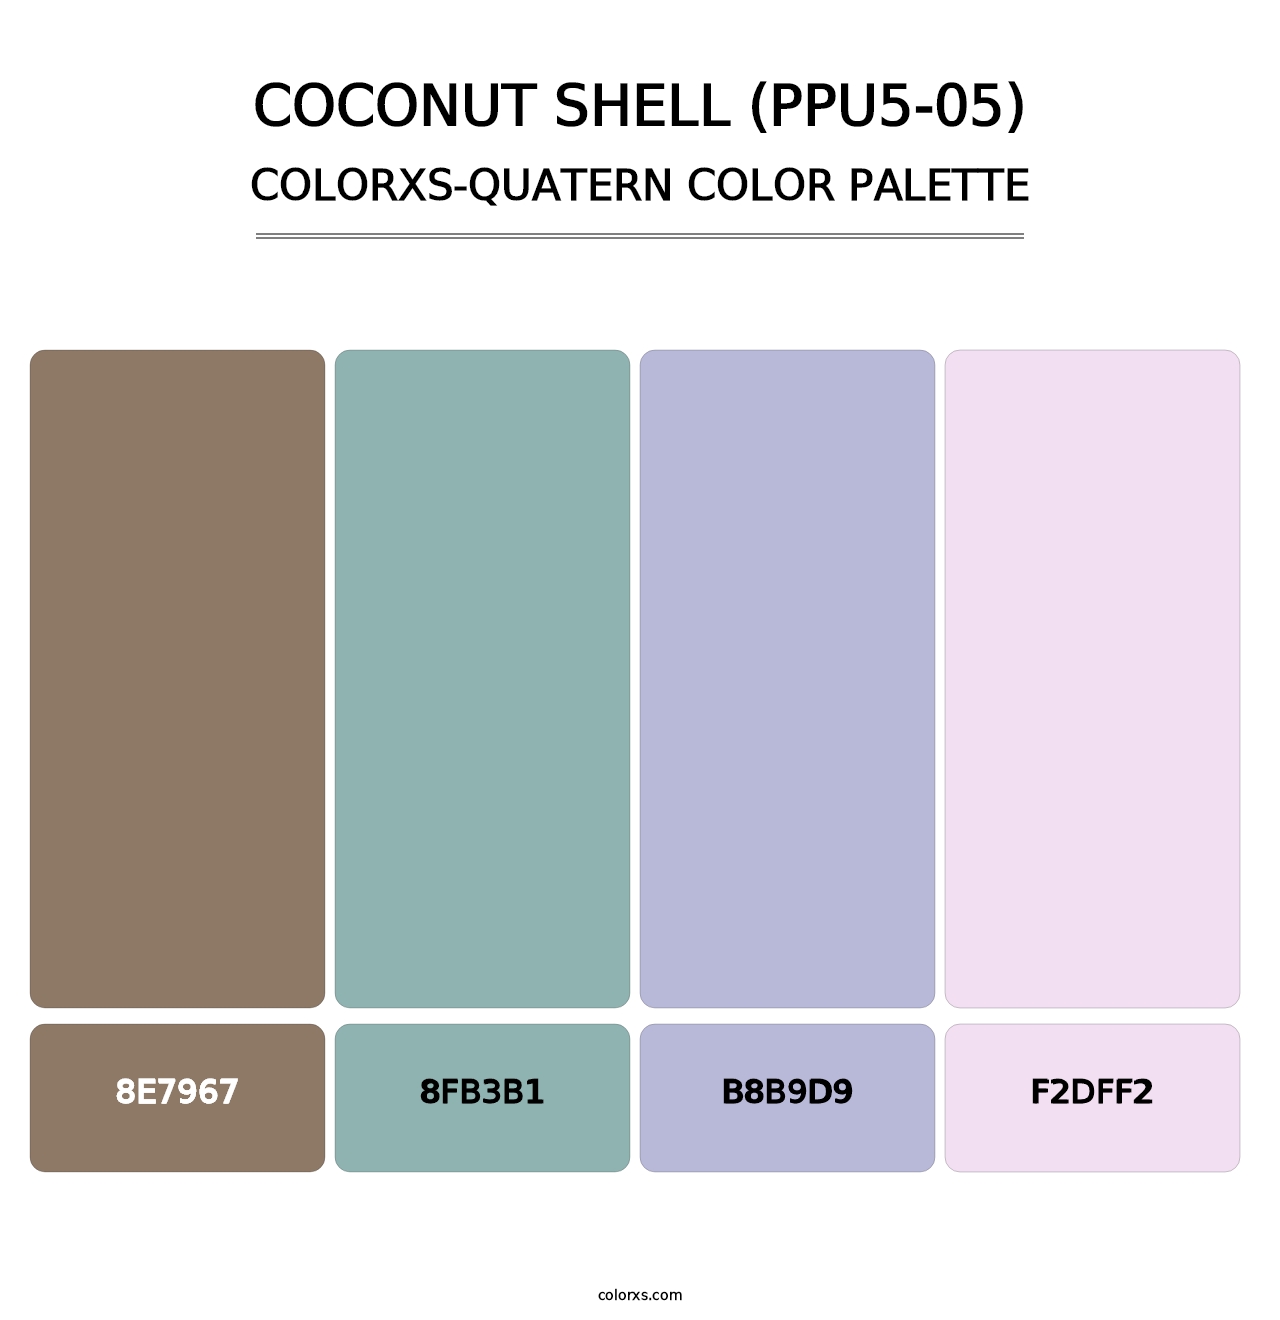 Coconut Shell (PPU5-05) - Colorxs Quatern Palette